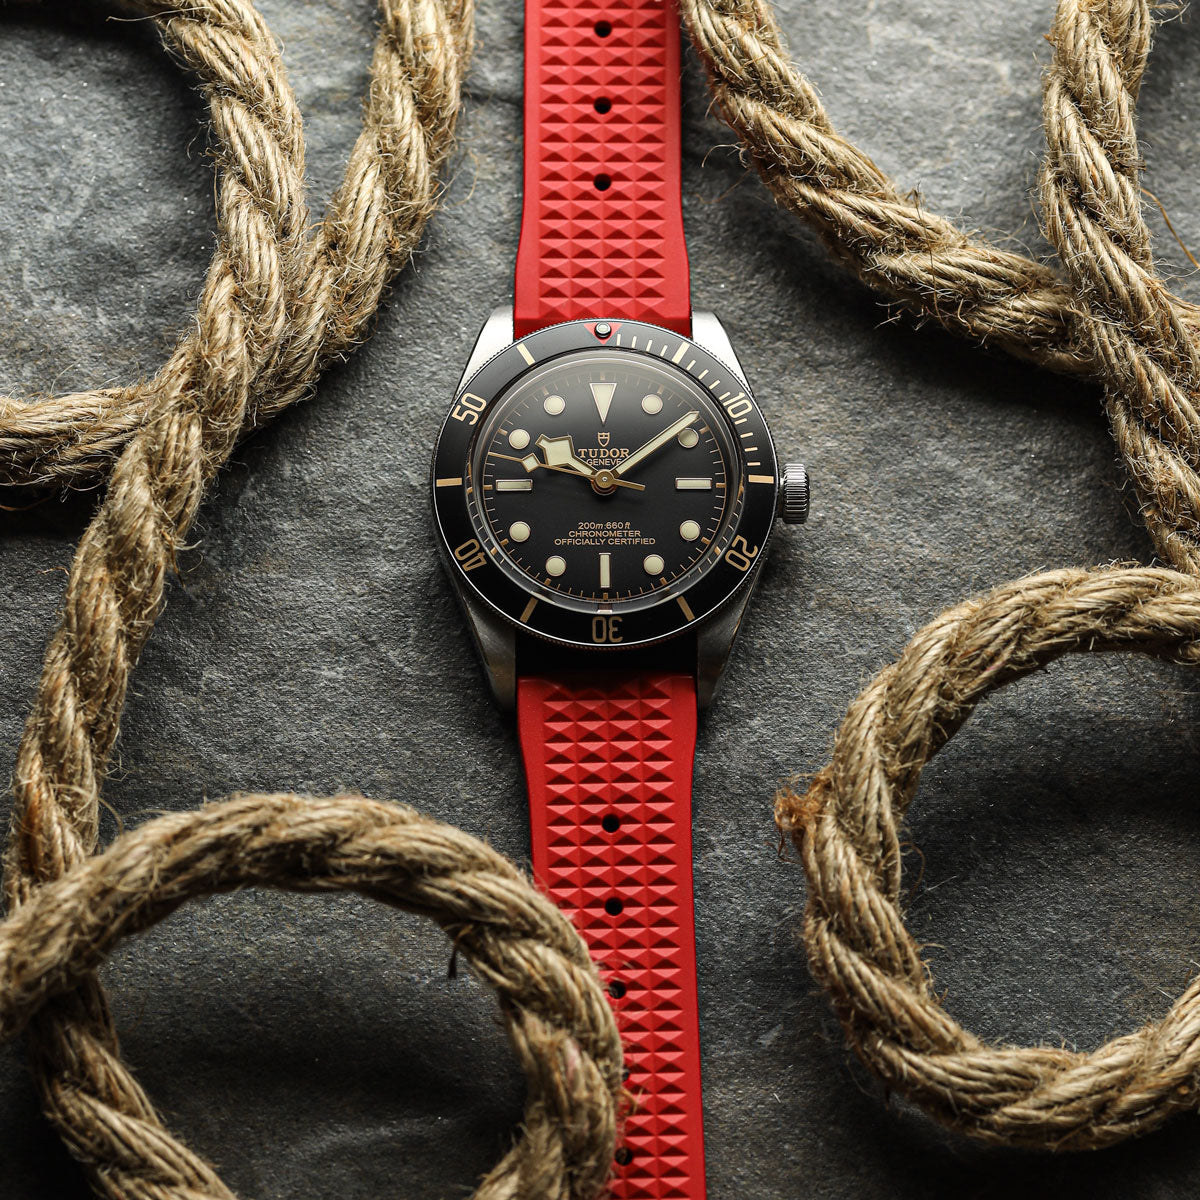 Seacroft Waffle FKM Rubber Dive Watch Strap - Crimson Red